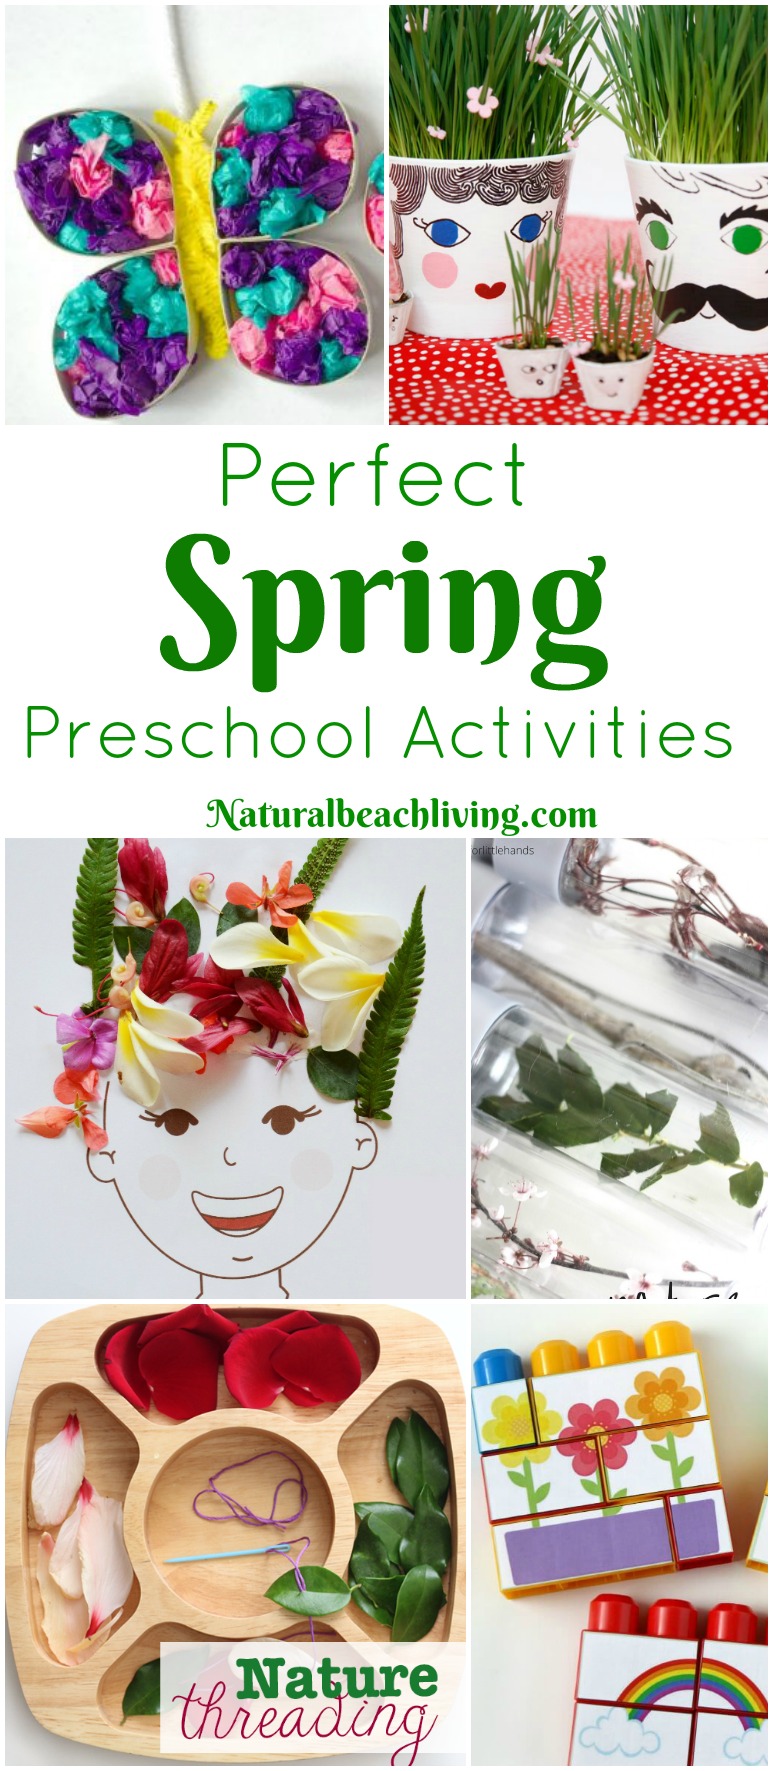 45+ Spring Preschool Activities That Make Everyone Happy